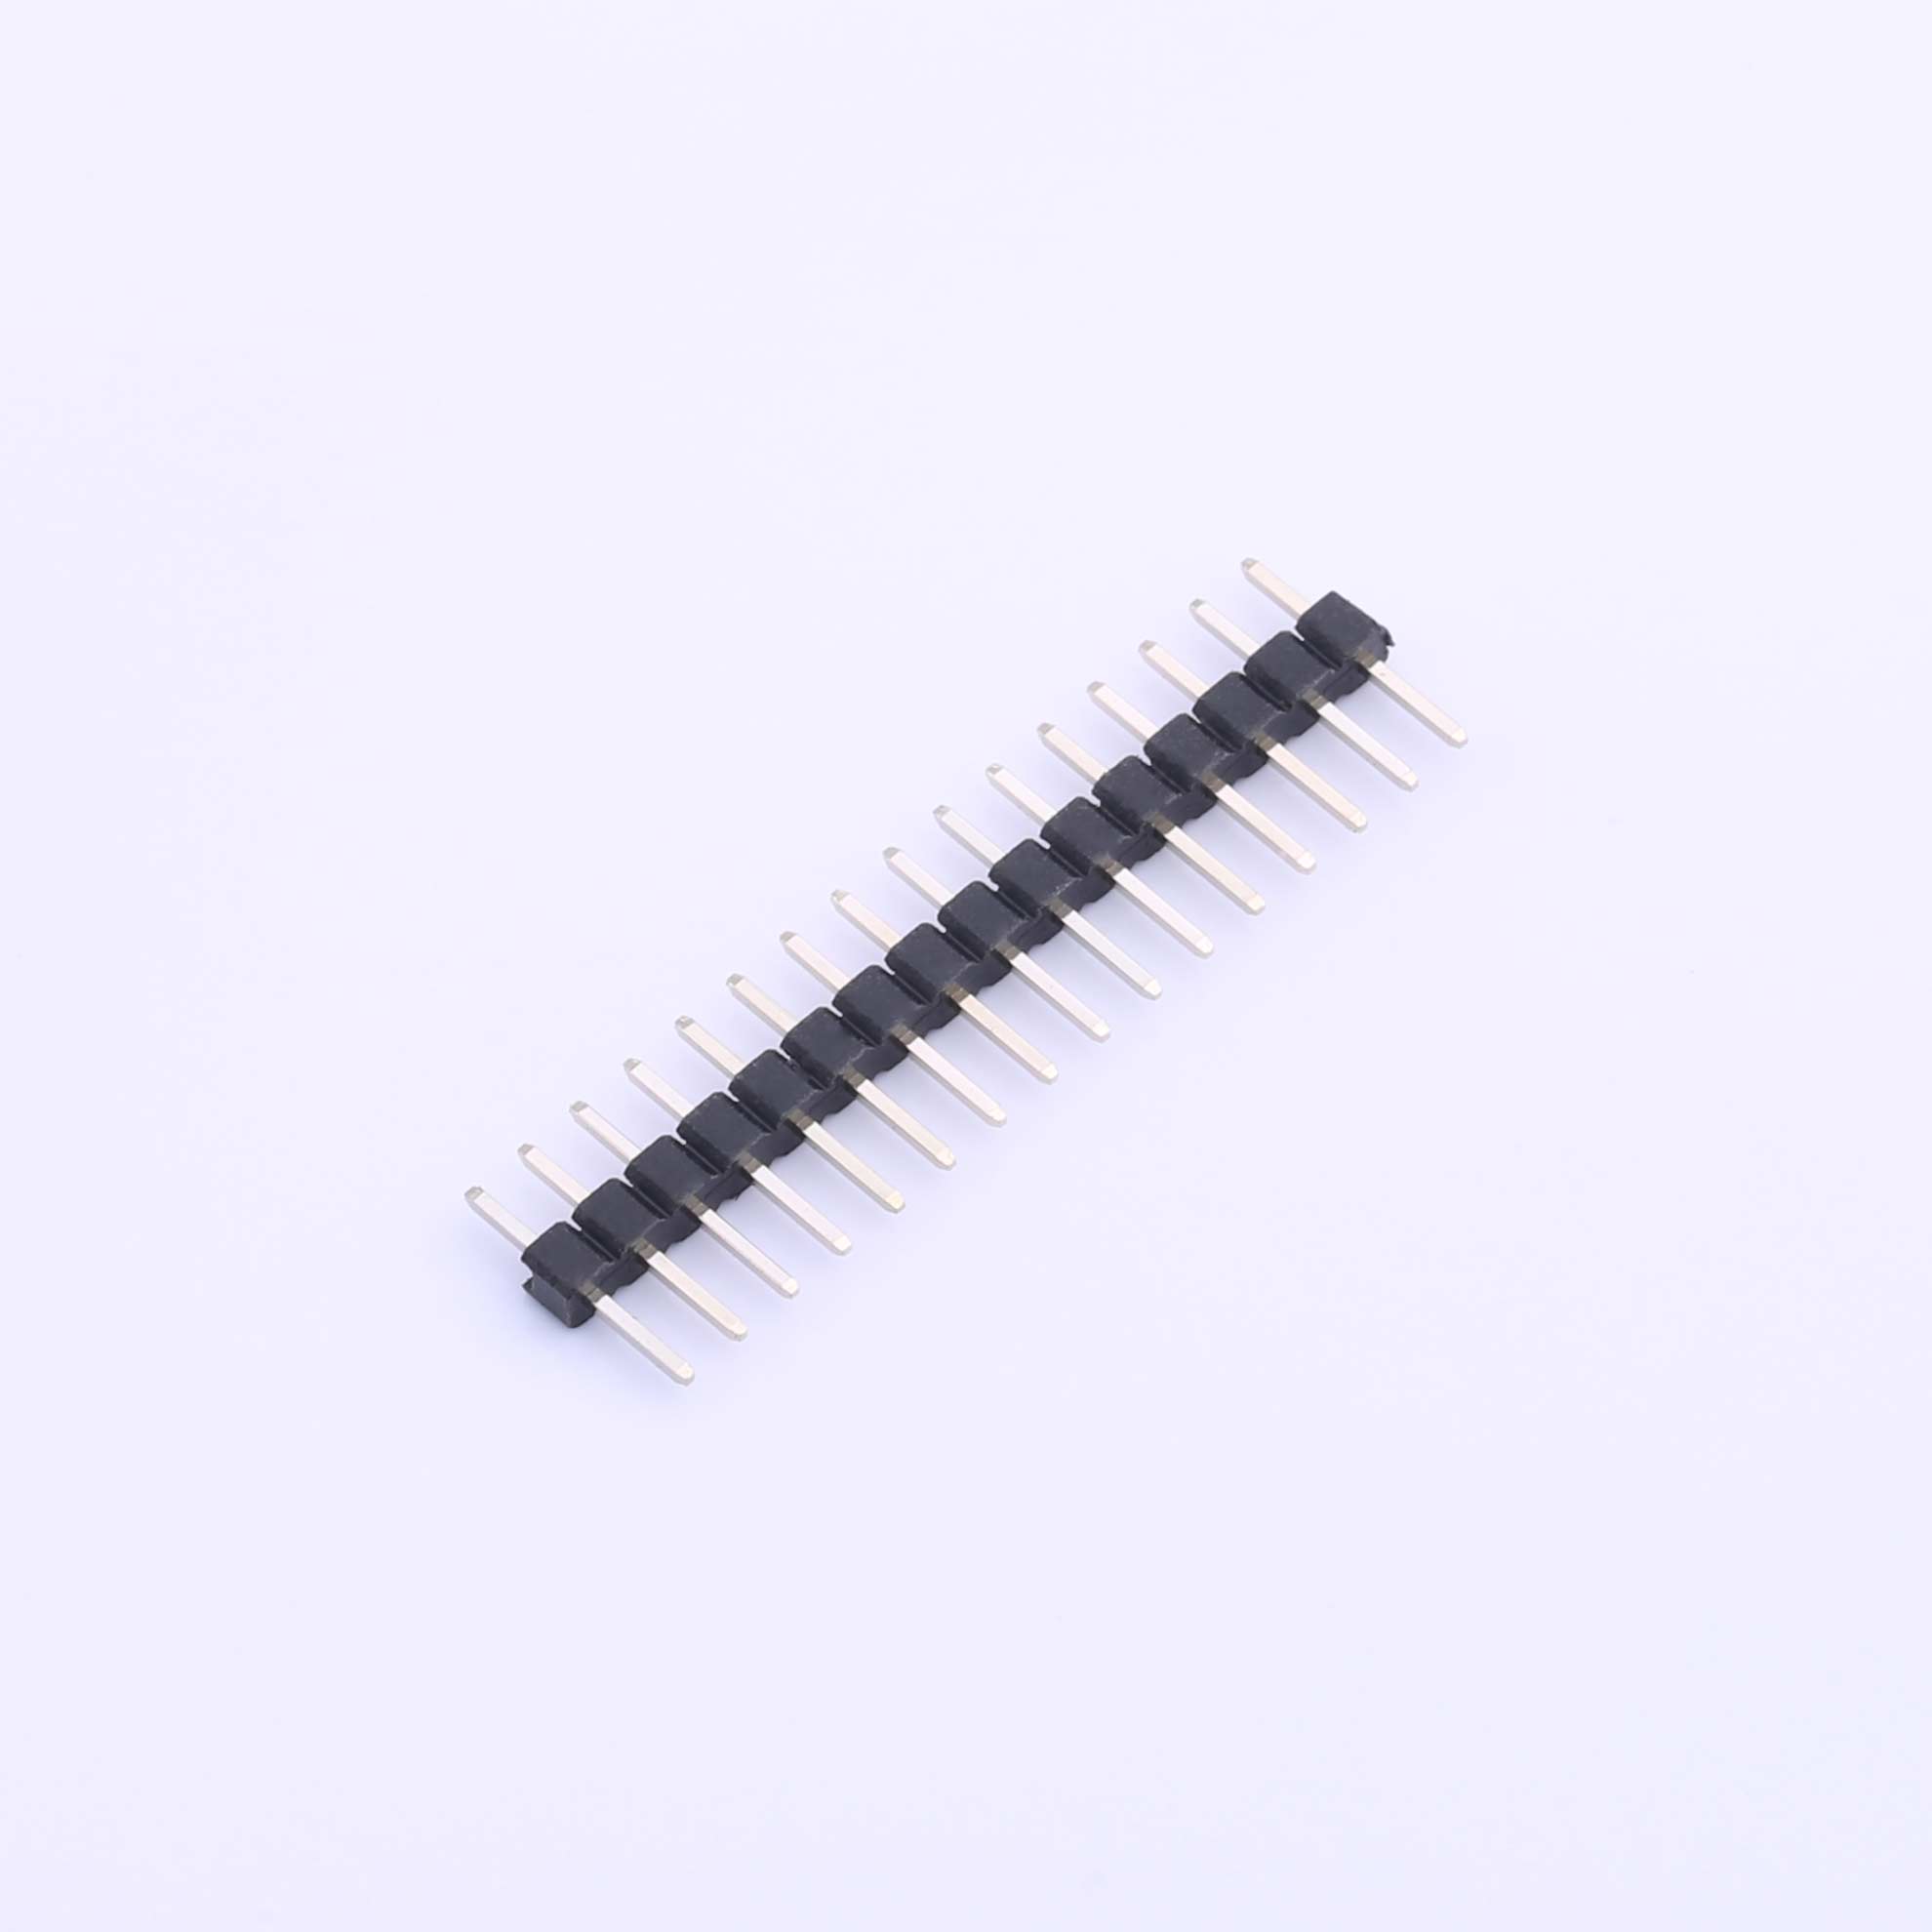 Kinghelm 2mm Pin Header Connector 16 Pin 1.5A -  KH-2PH180-1X16P-L8.7